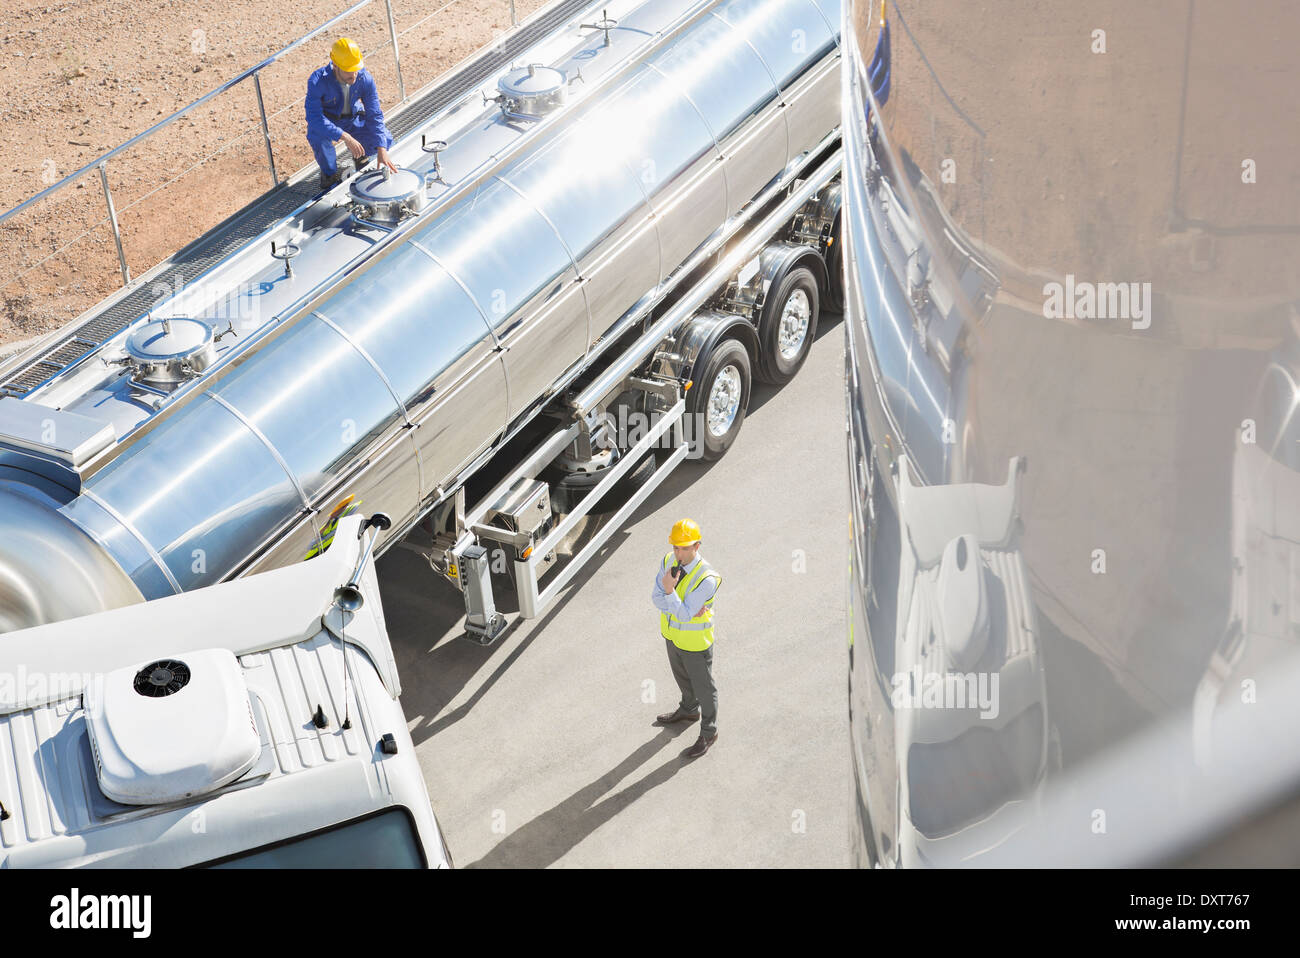 Workers around stainless steel milk tanker Stock Photo